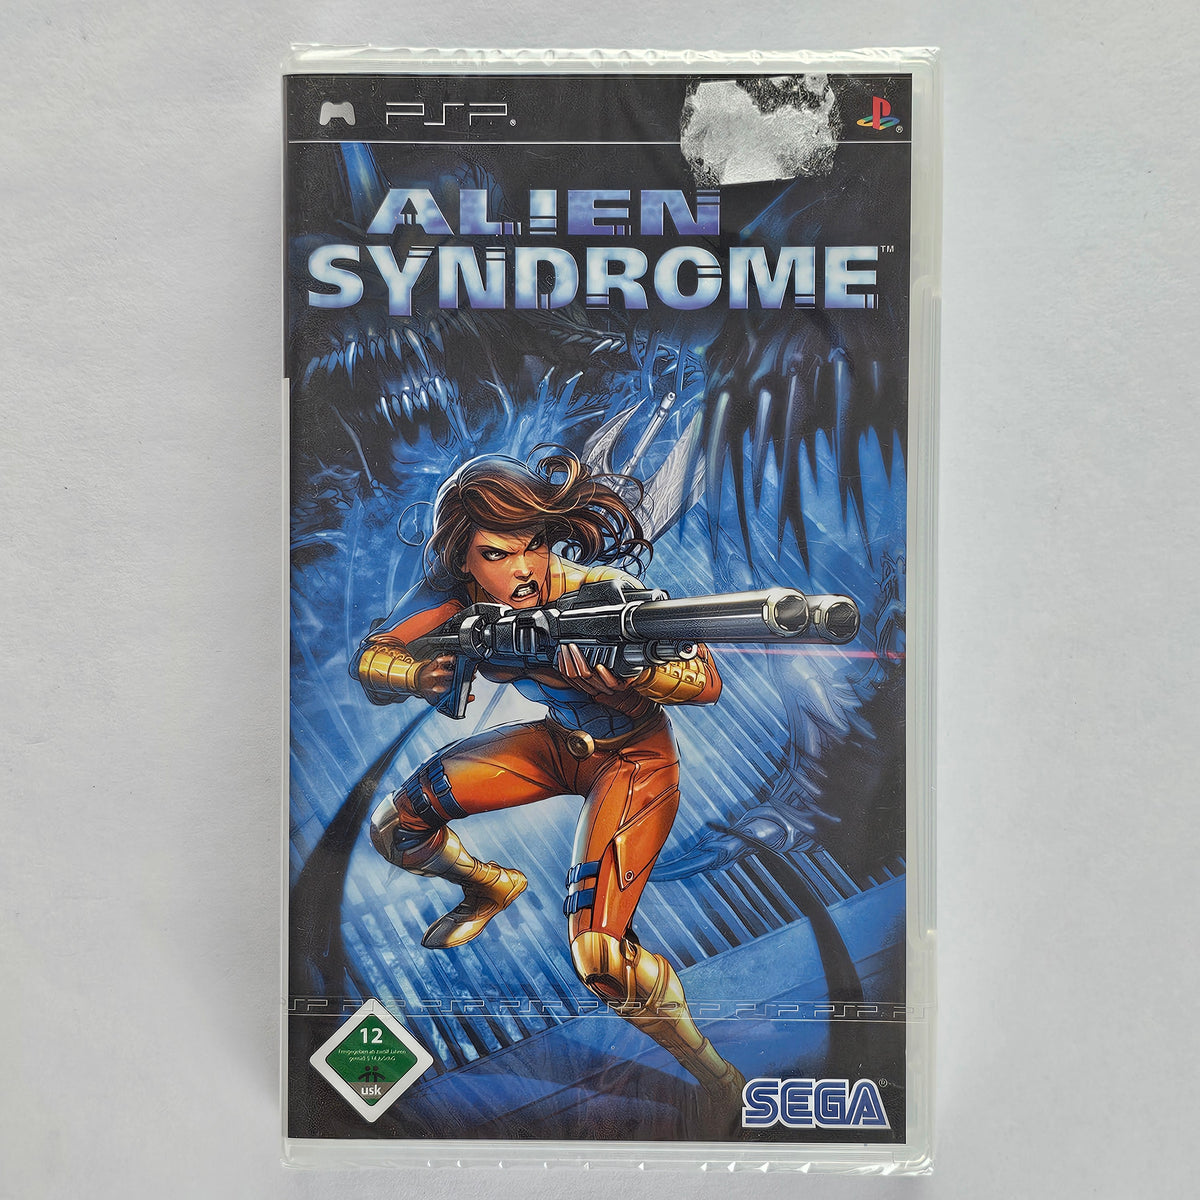 Alien Syndrome Playstation PSP [PSP]